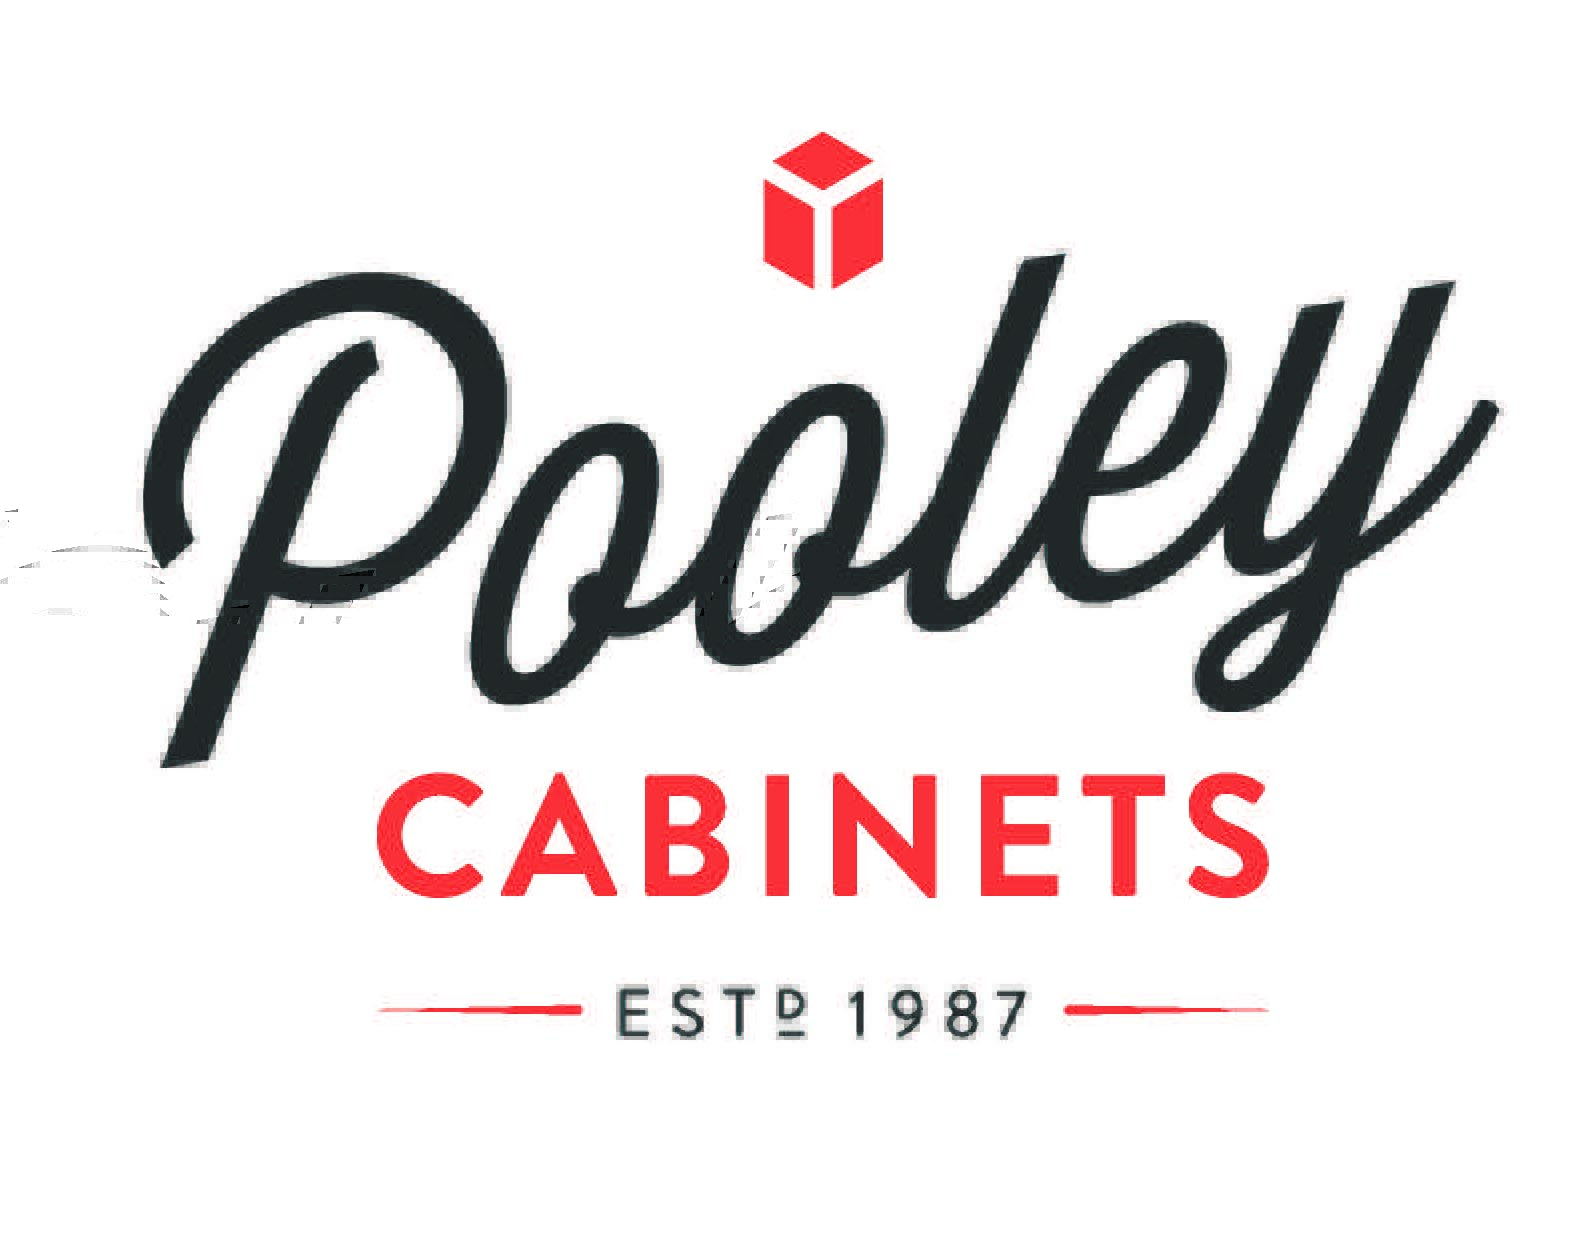 Pooley Cabinet Industries Ltd.